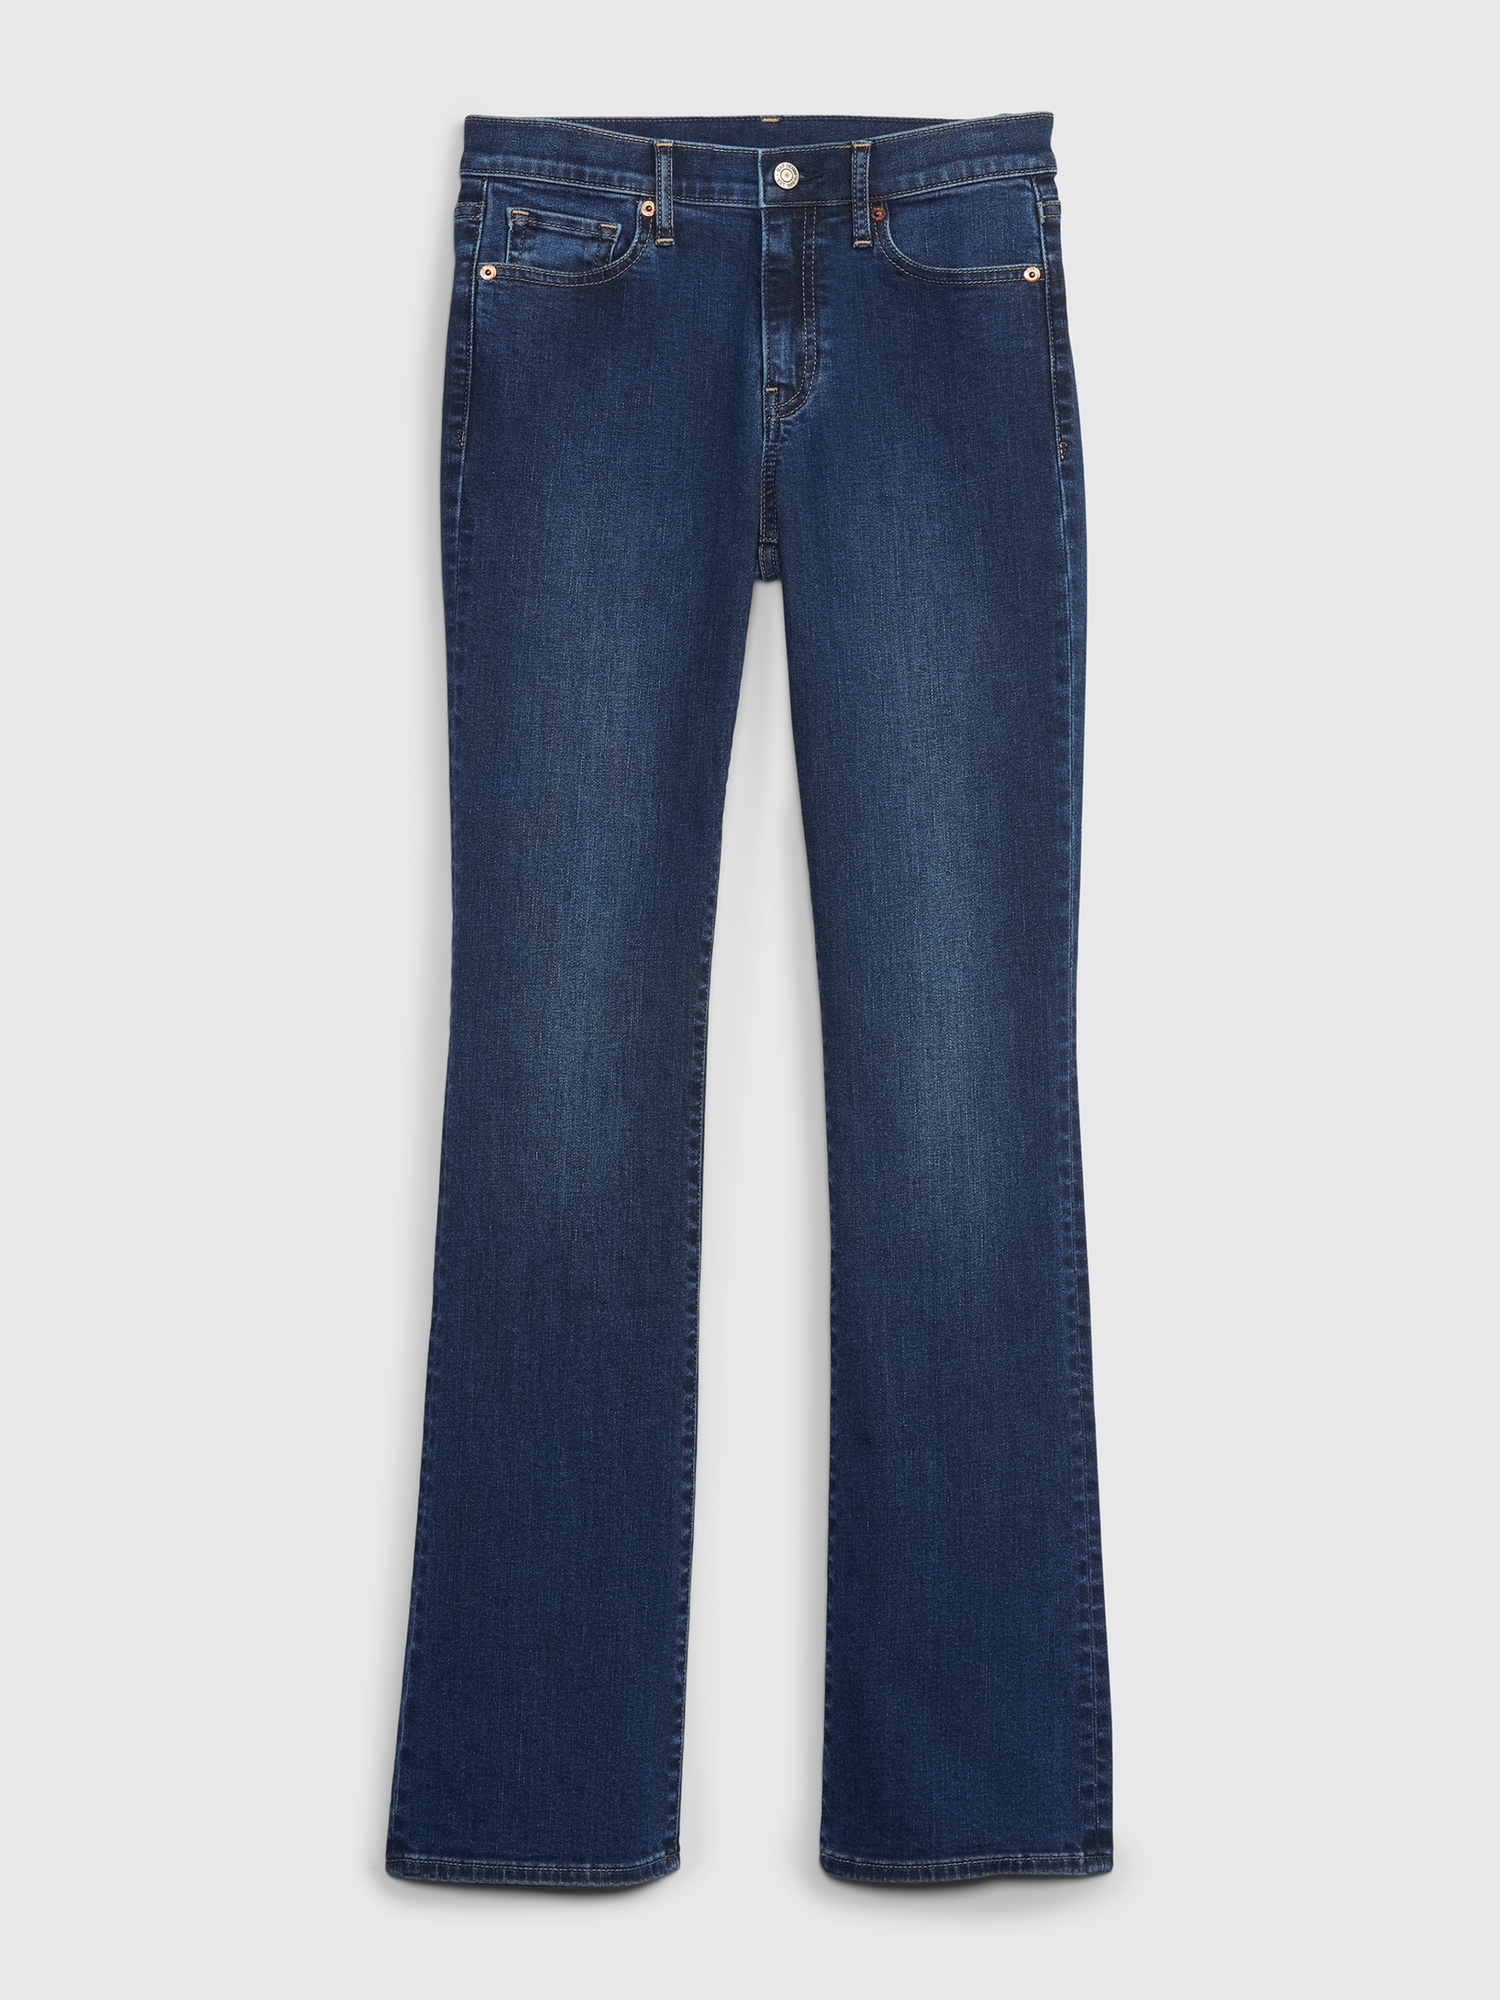 Apt. 9 5-Pocket Design Boot Cut Jeans for Women